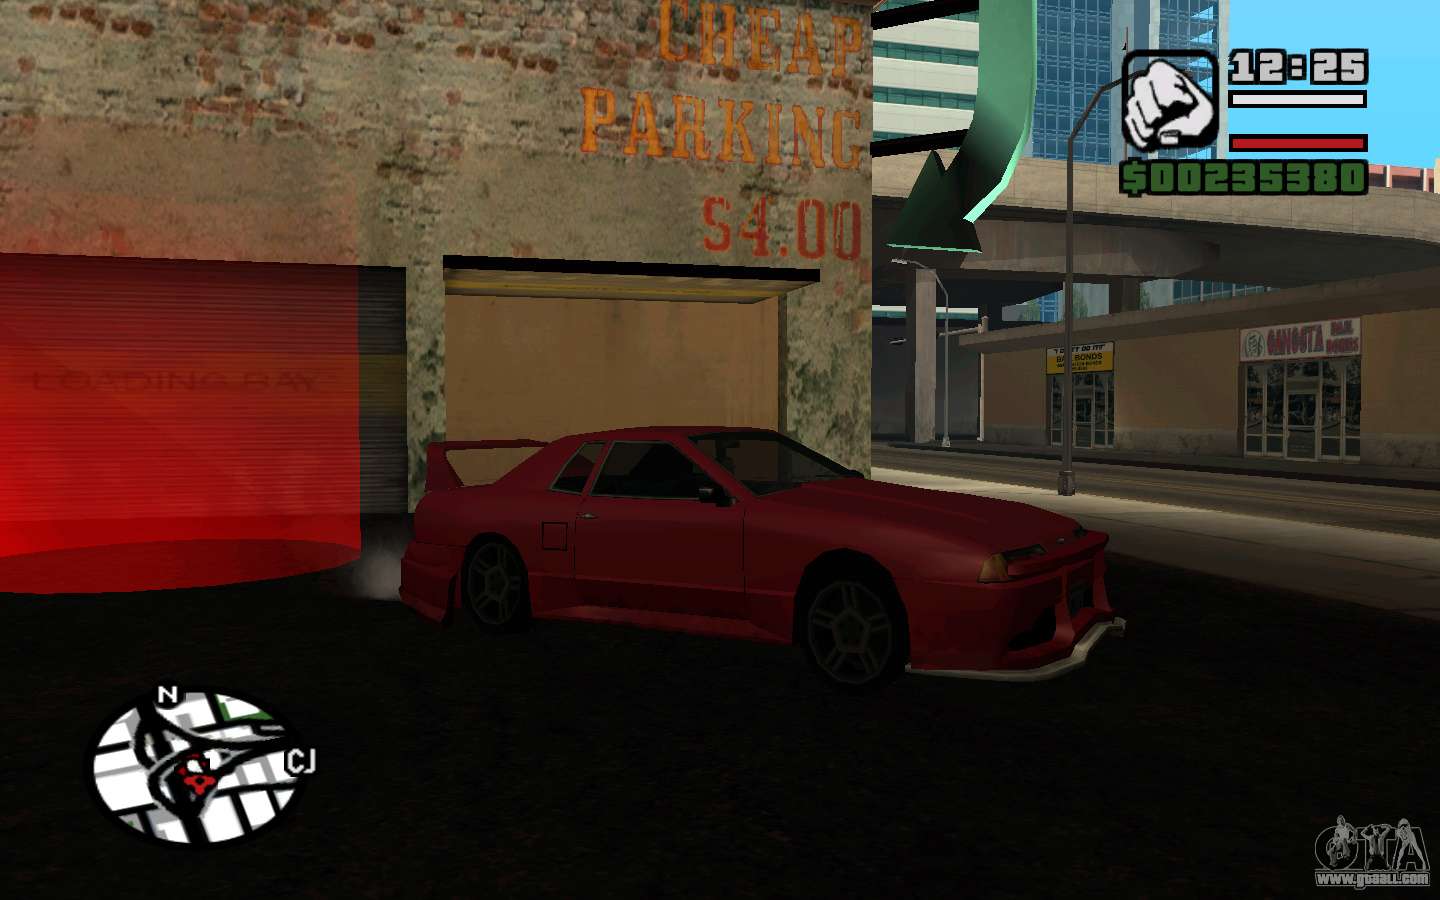 Grand Theft Auto: Vice City MOD, Money - android-1com